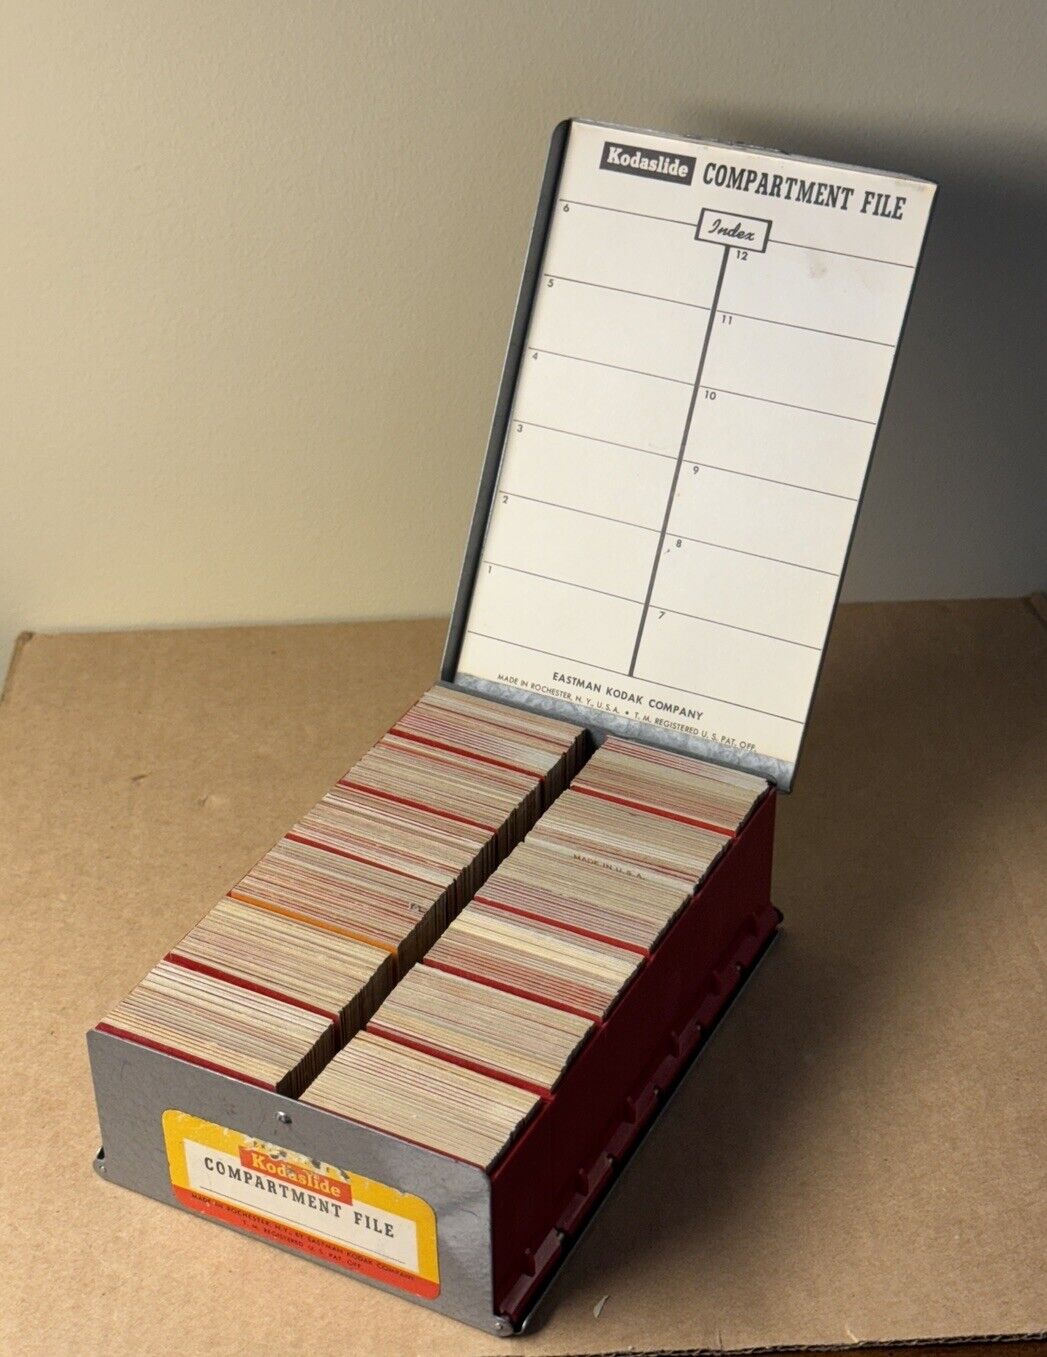 240 Slide Lot 1950s Red Border Kodachrome Slides In a Kodaslide Compartment File